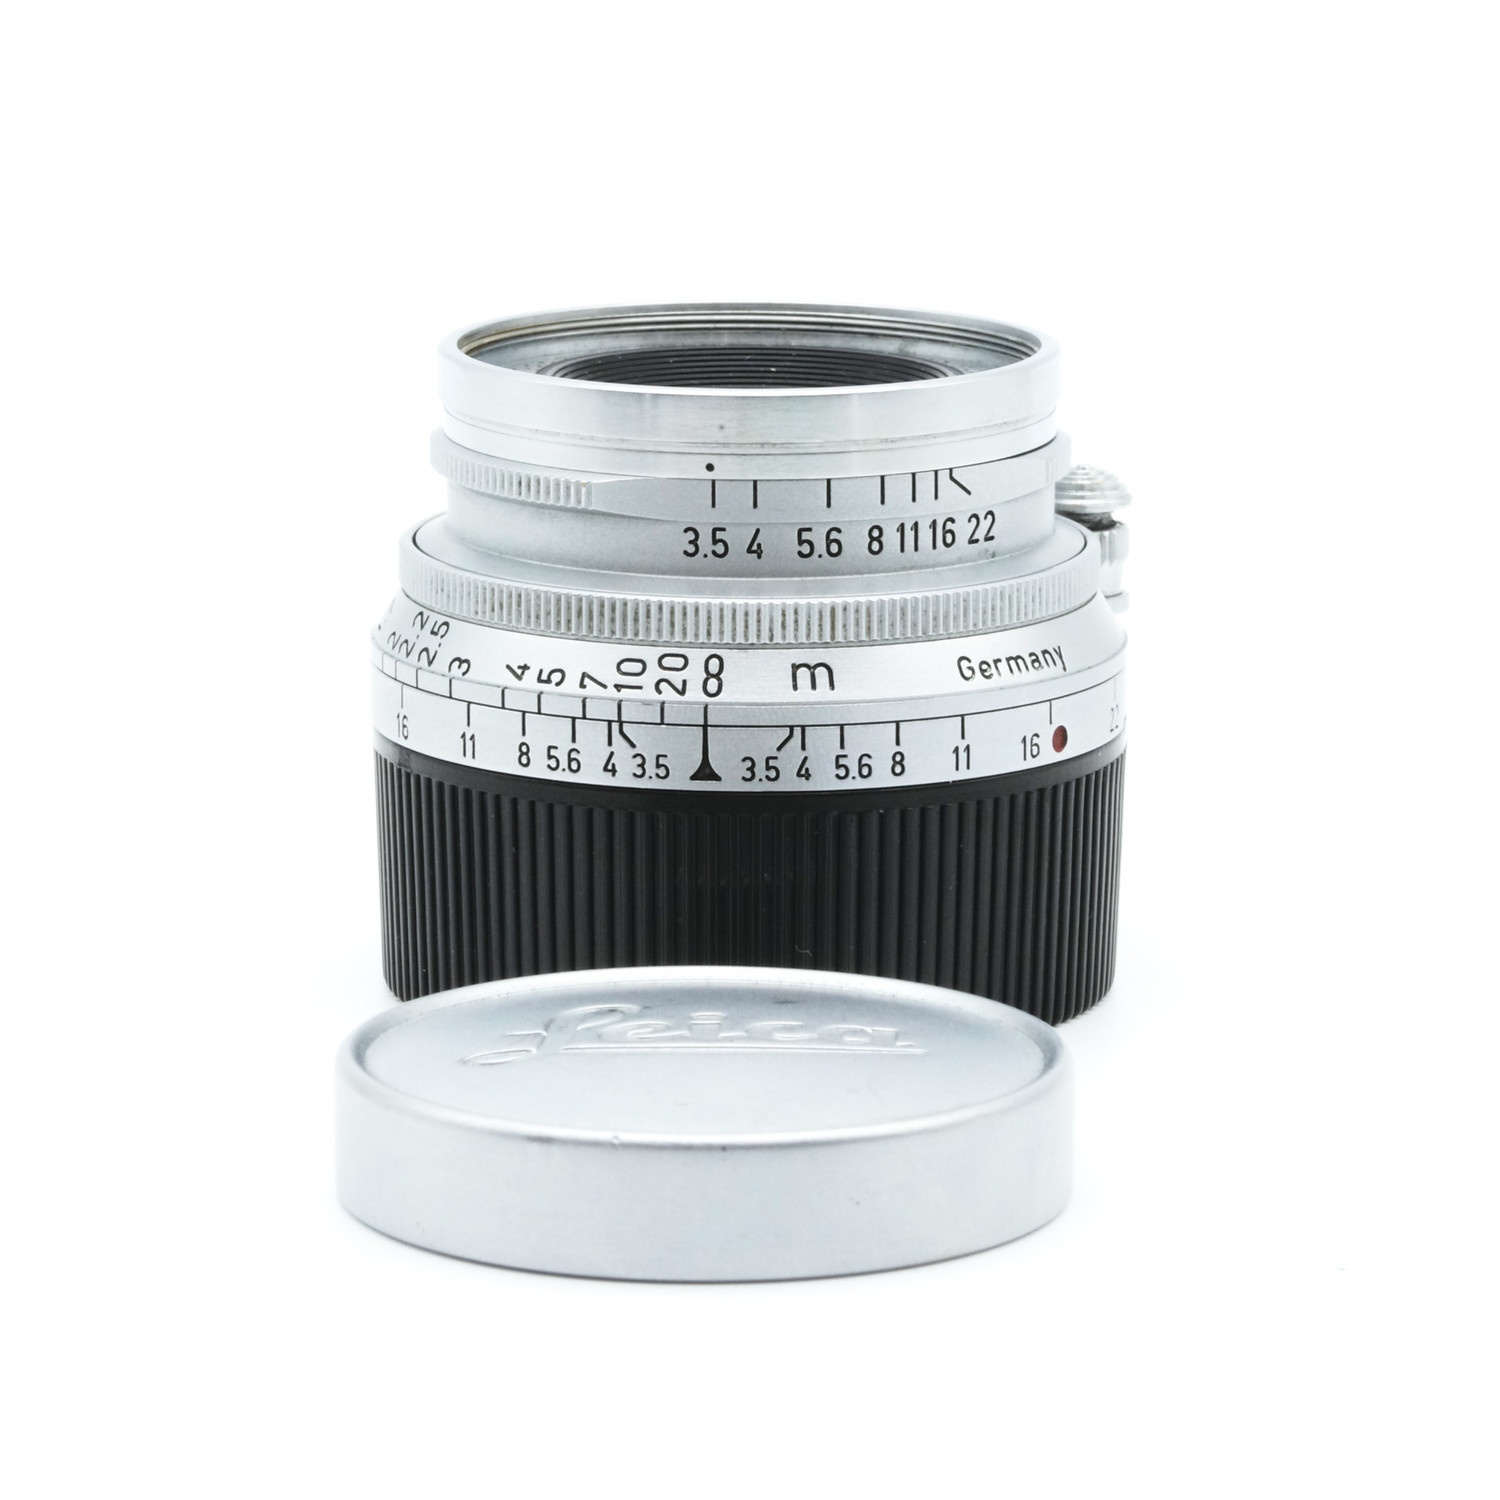 Leica Summaron 3.5cm F3.5